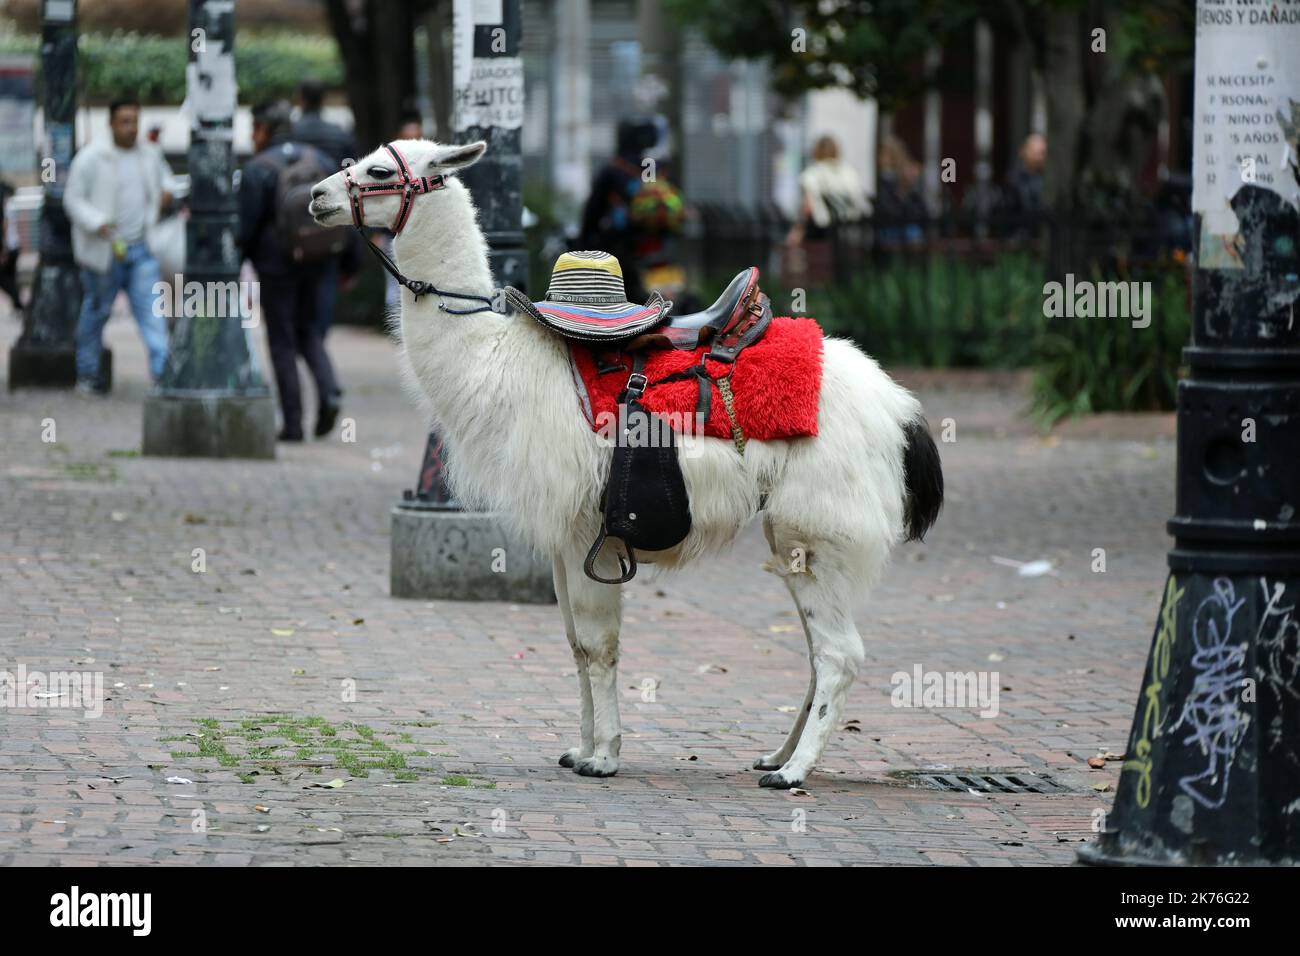 Llama in the city centre of Bogota Stock Photo